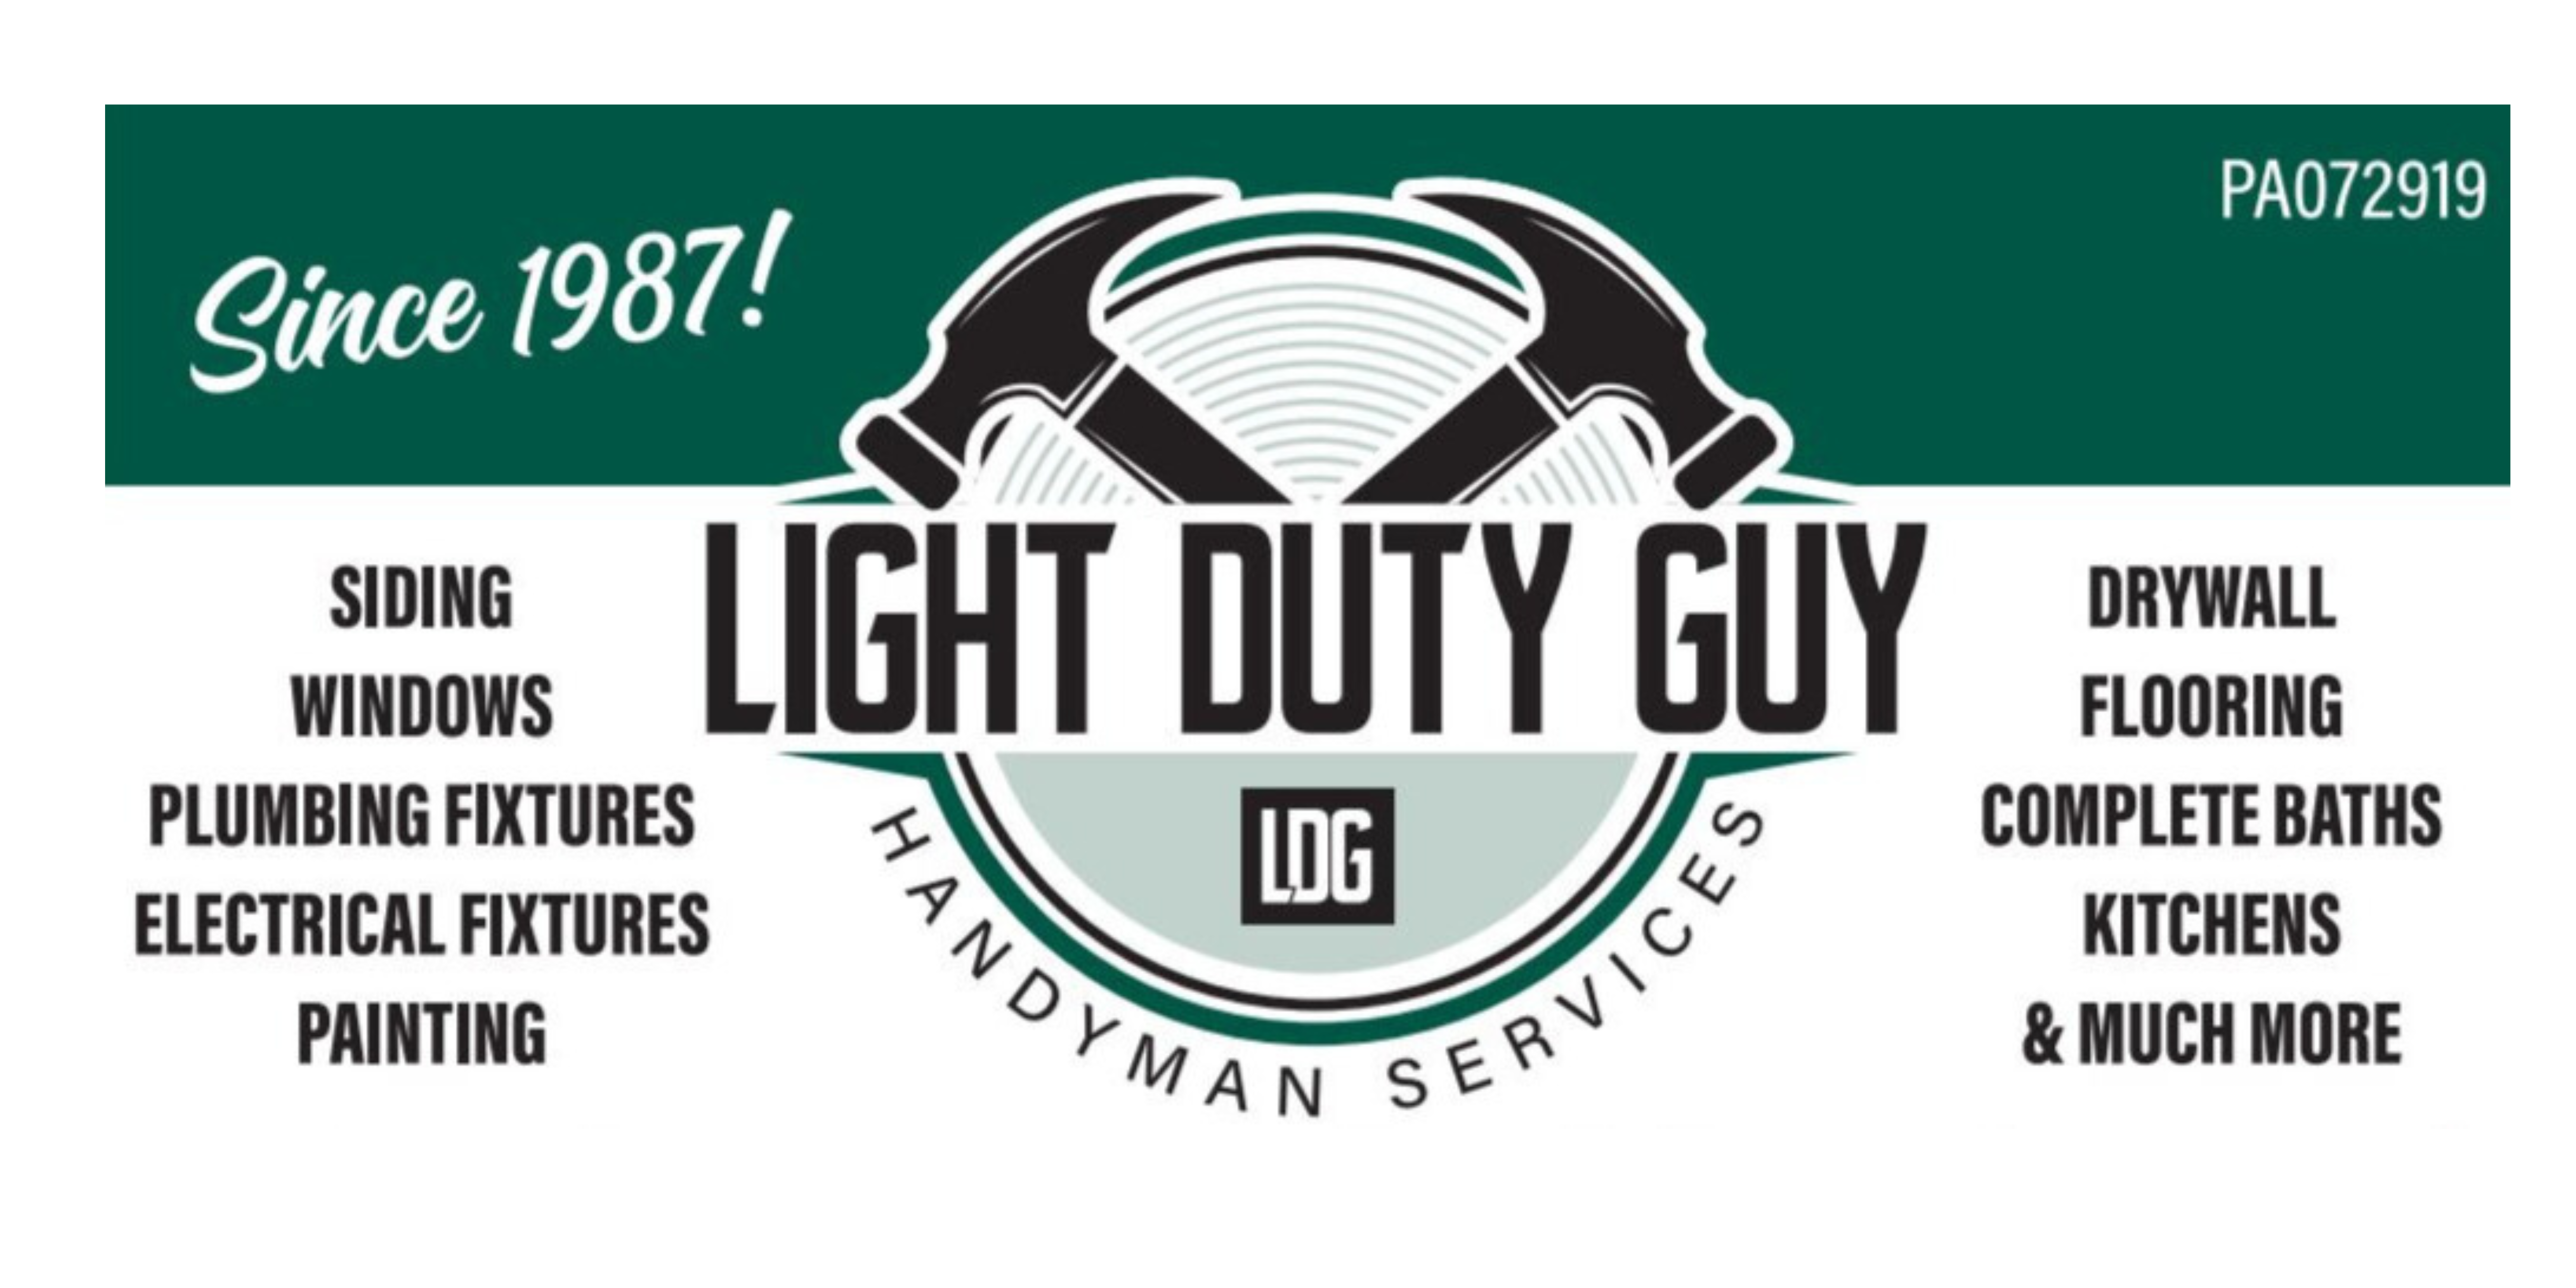 The Light Duty Guy